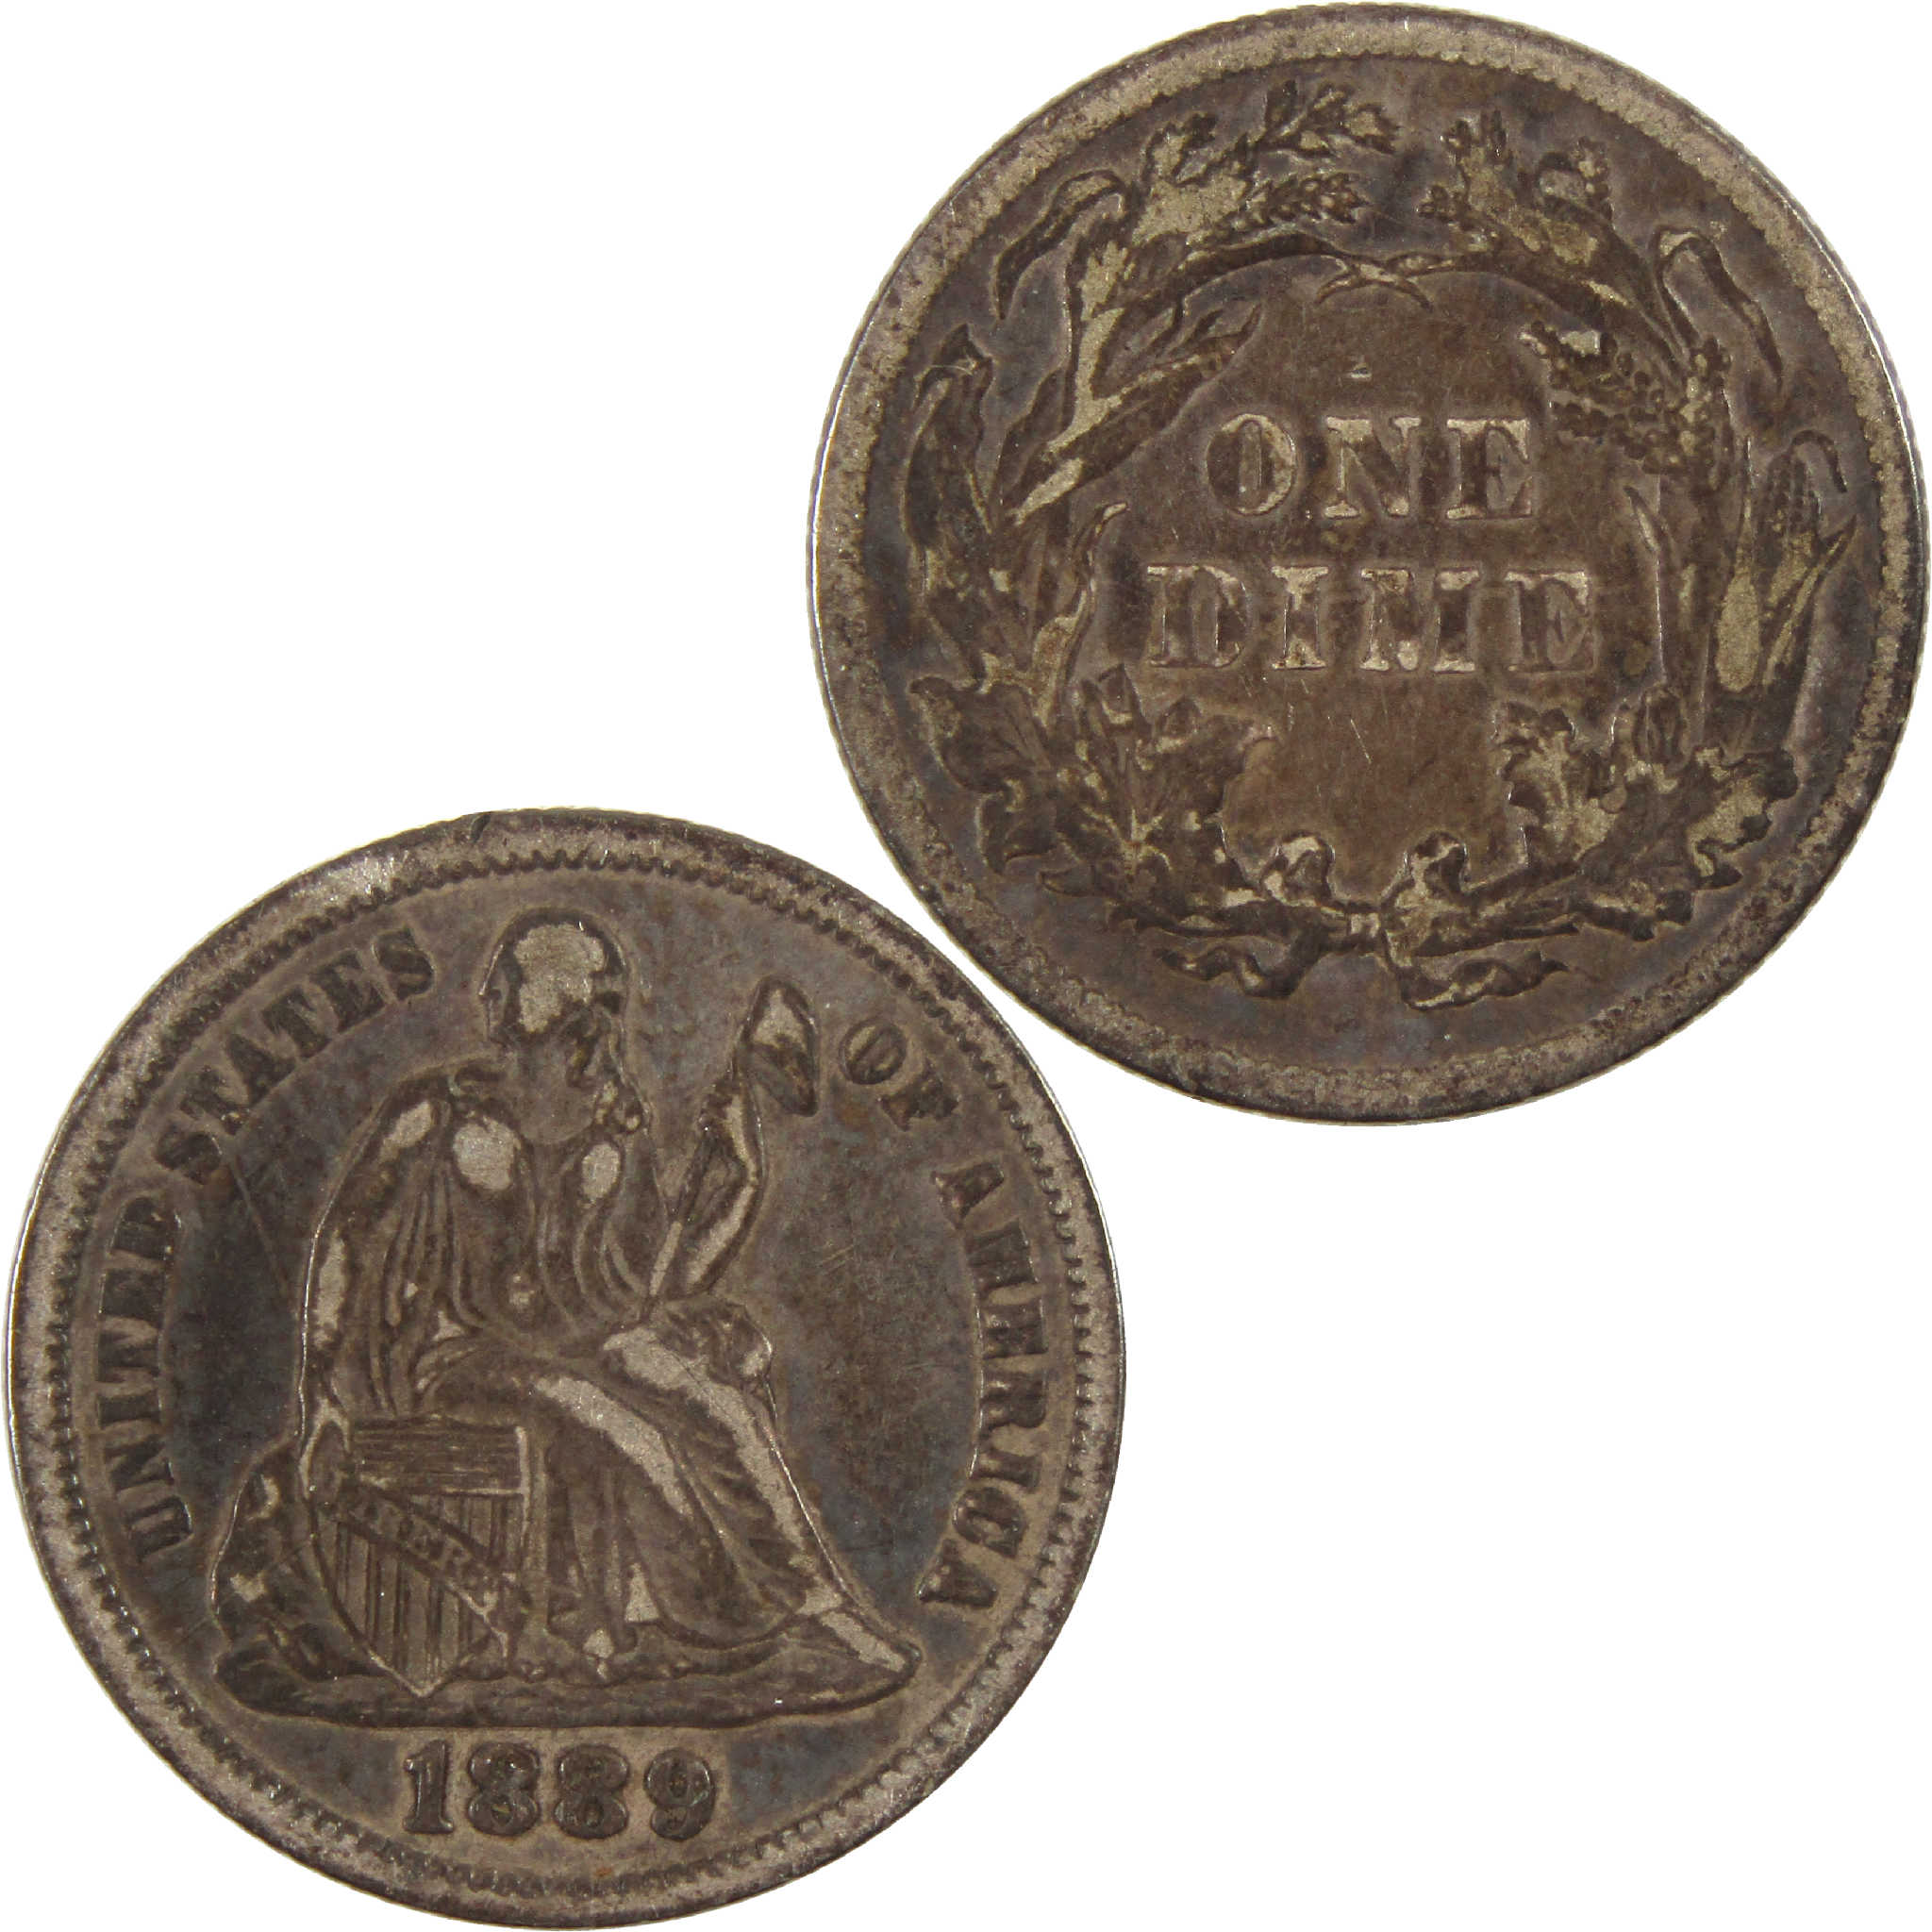 1889 Seated Liberty Dime XF EF Silver 10c Coin SKU:I11541